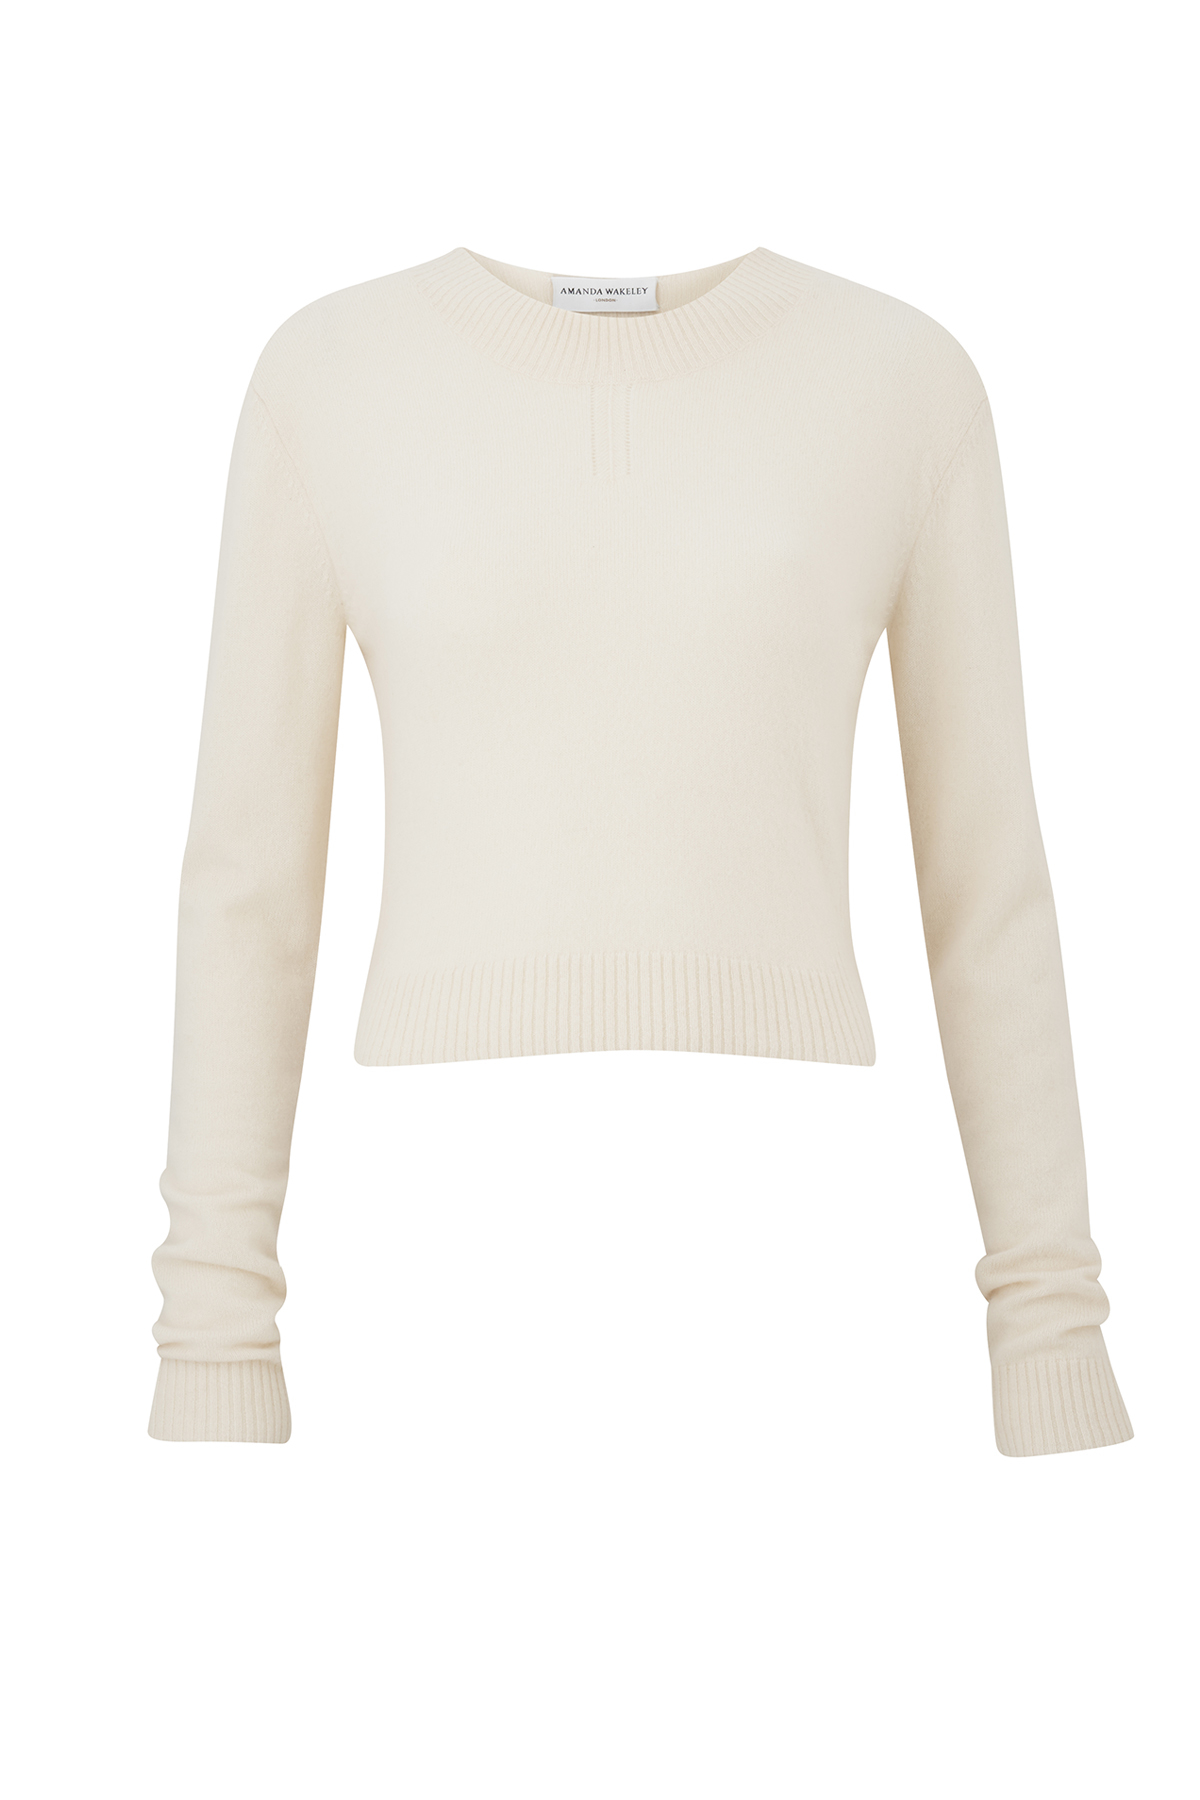 Amanda wakeley Campbell Cream Cropped Cashmere Sweater in Beige (cream ...